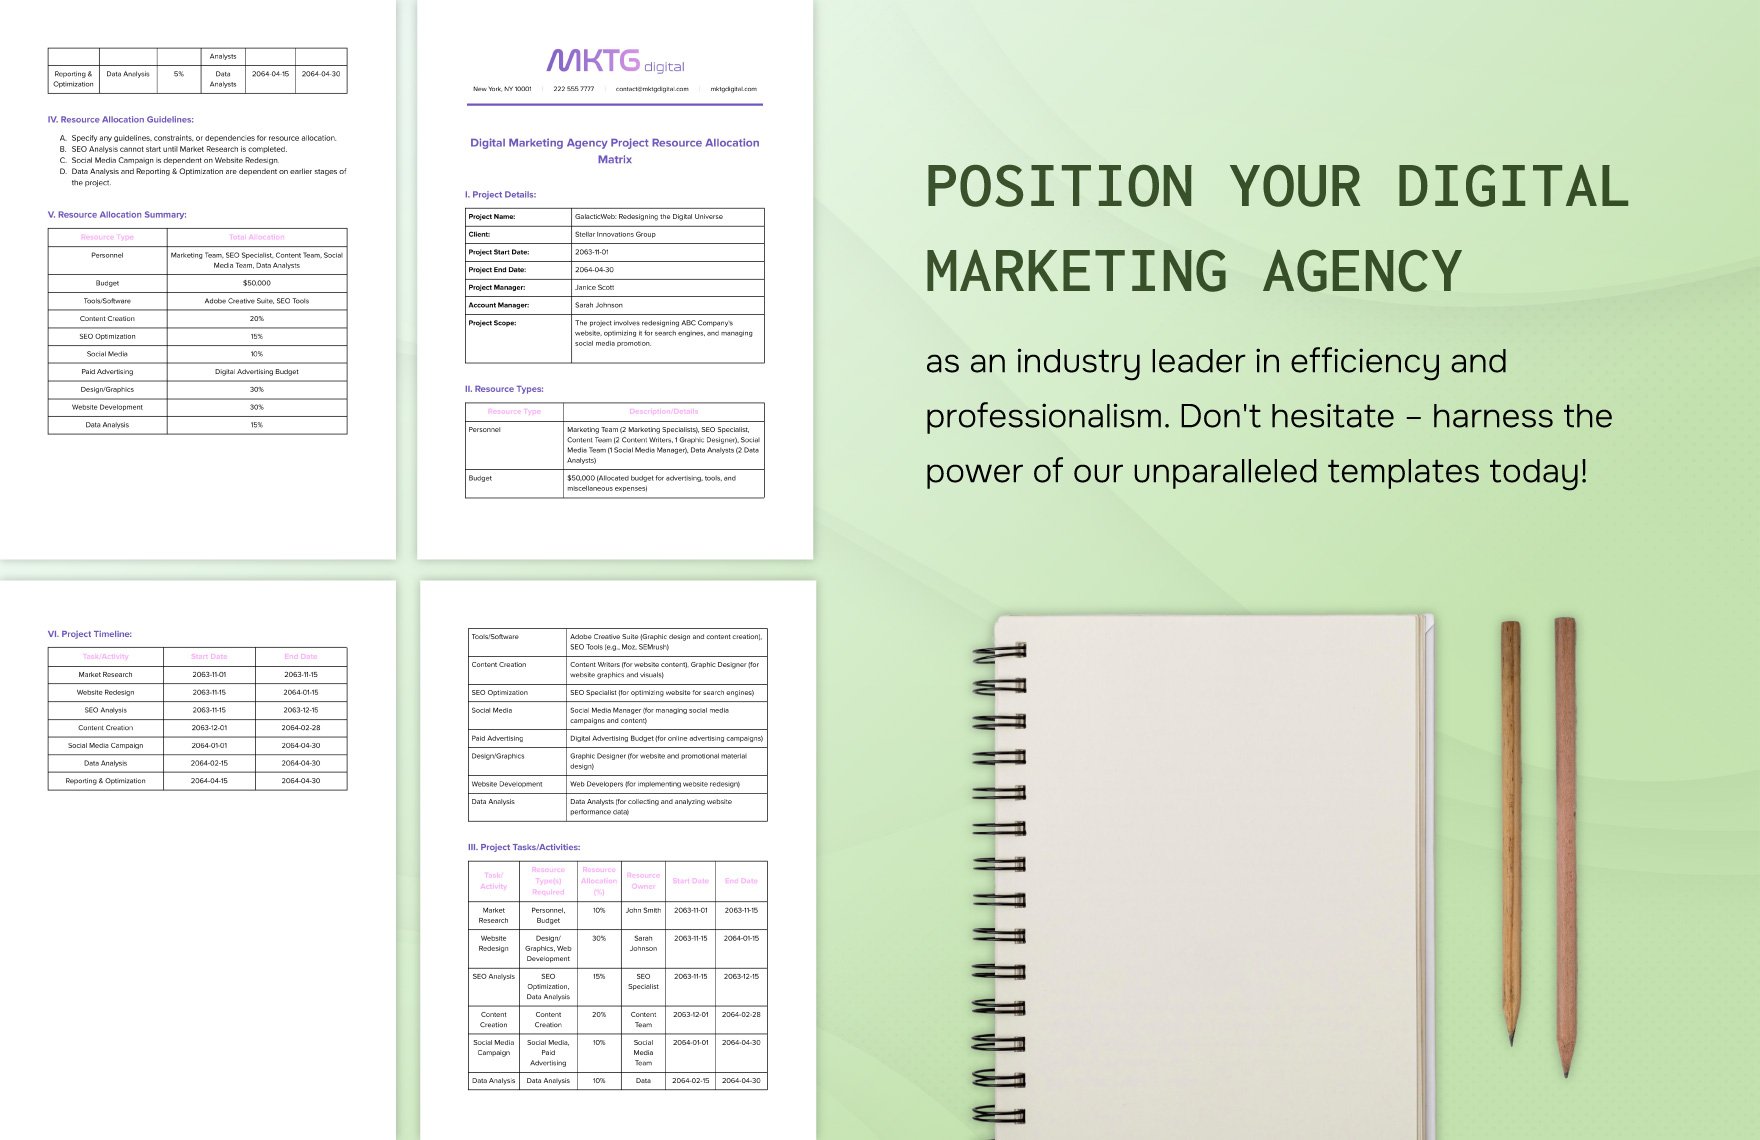 Digital Marketing Agency Project Resource Allocation Matrix Template